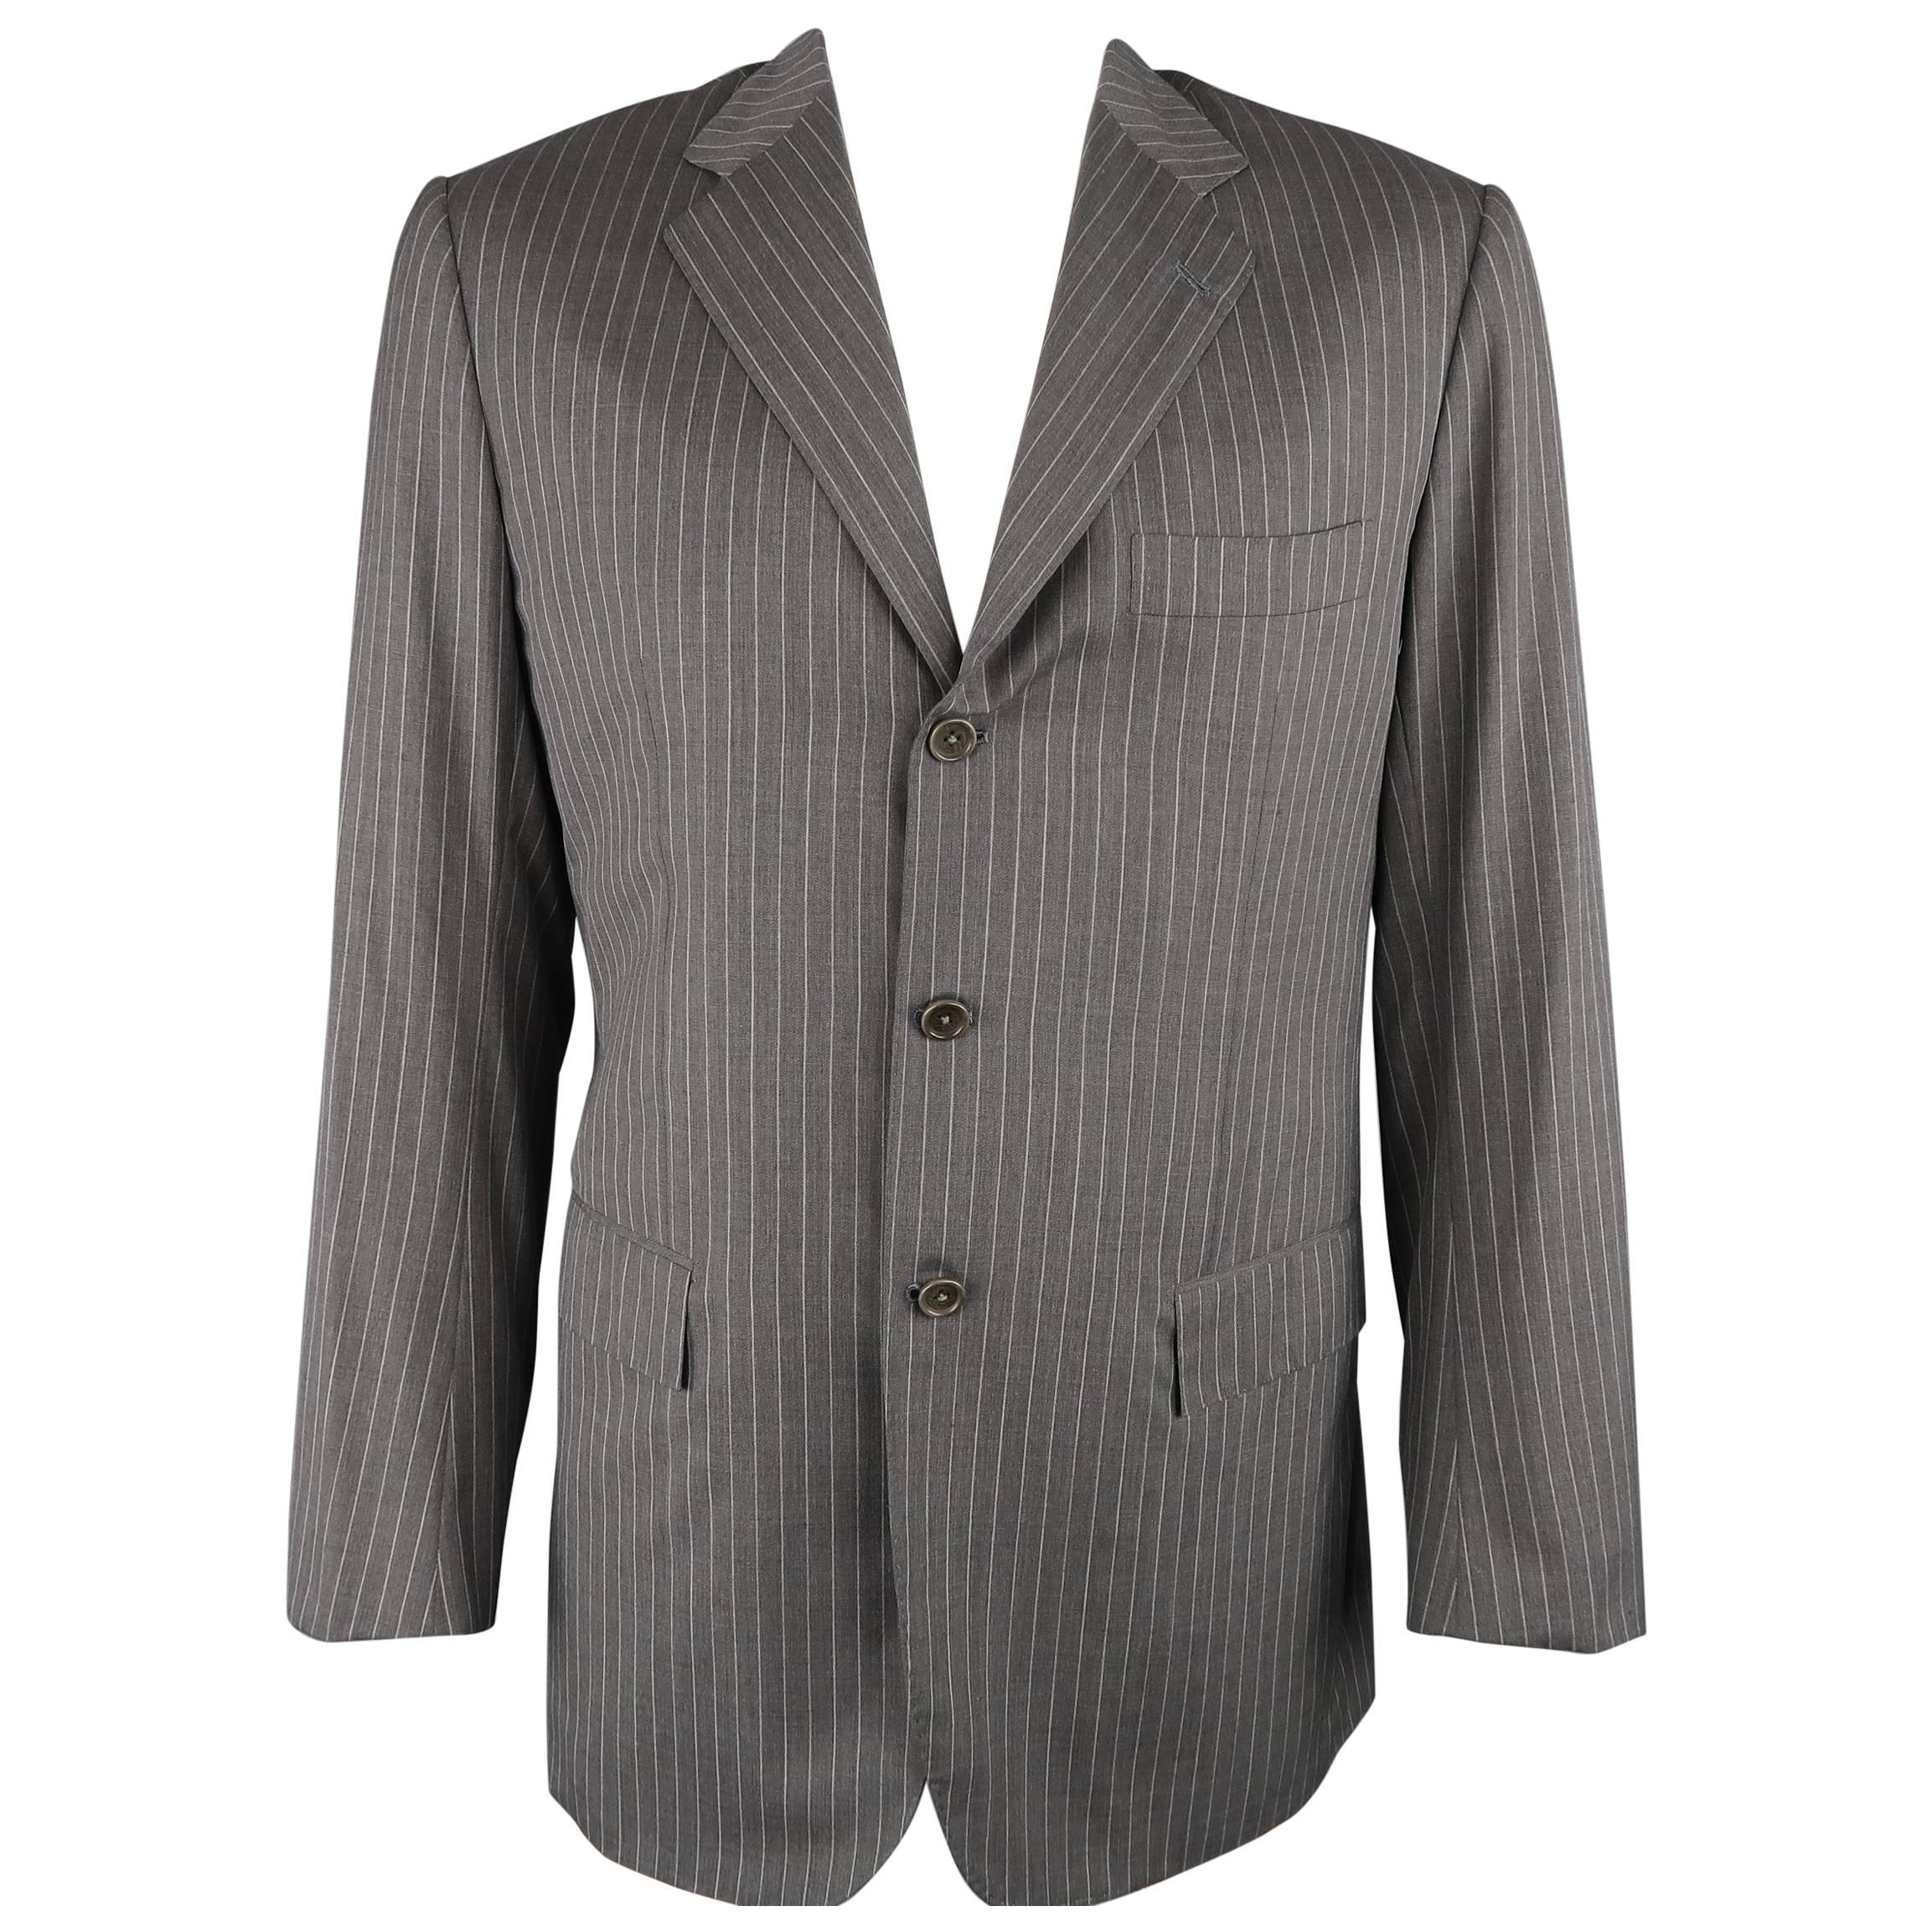 Kiton Men's Gray Pinstriped Wool 3 Button Notch Lapel Sport Coat